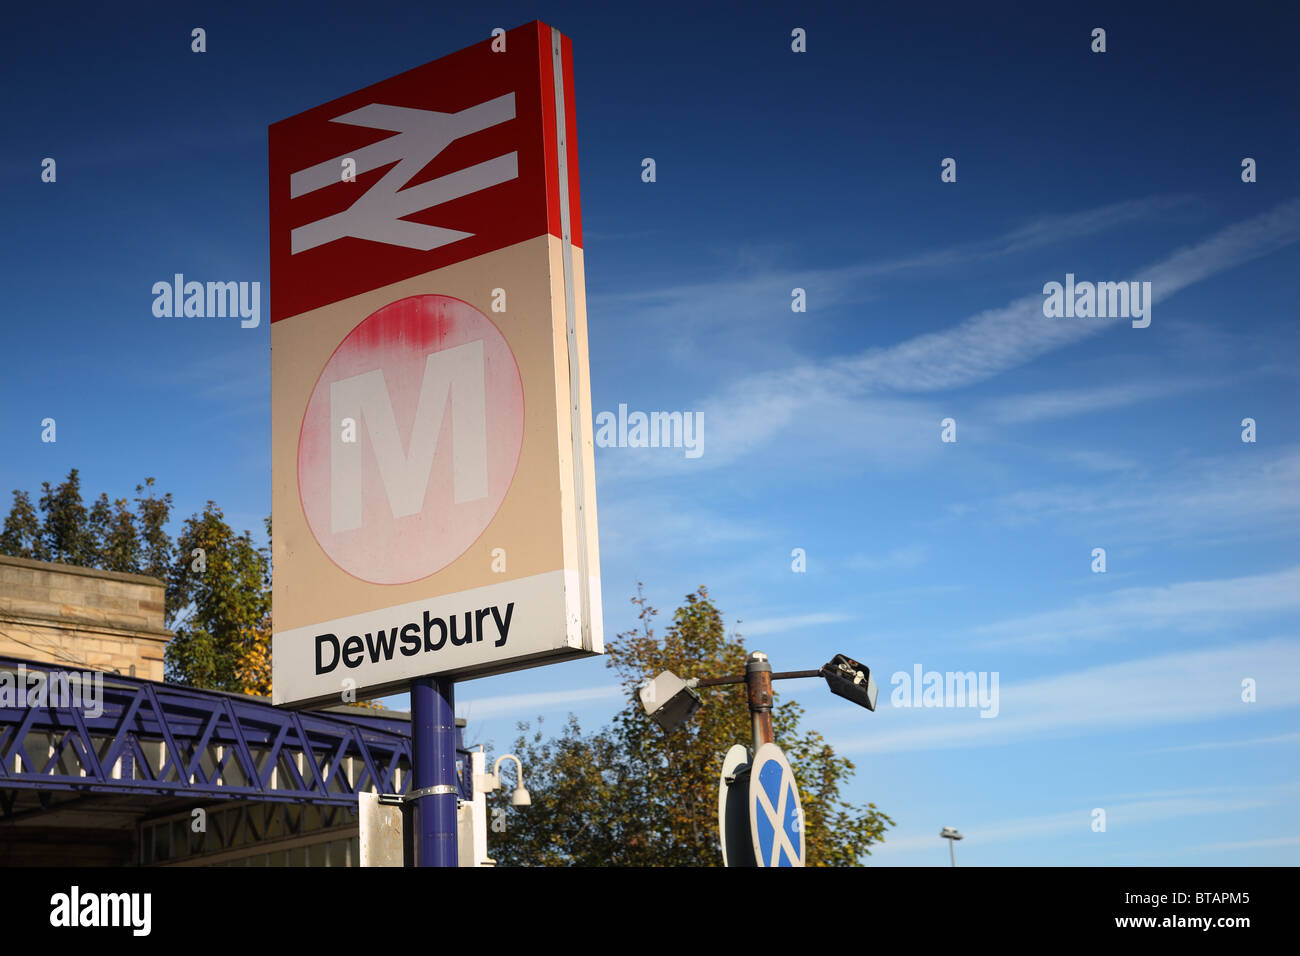 dewsbury train station sign Stock Photo